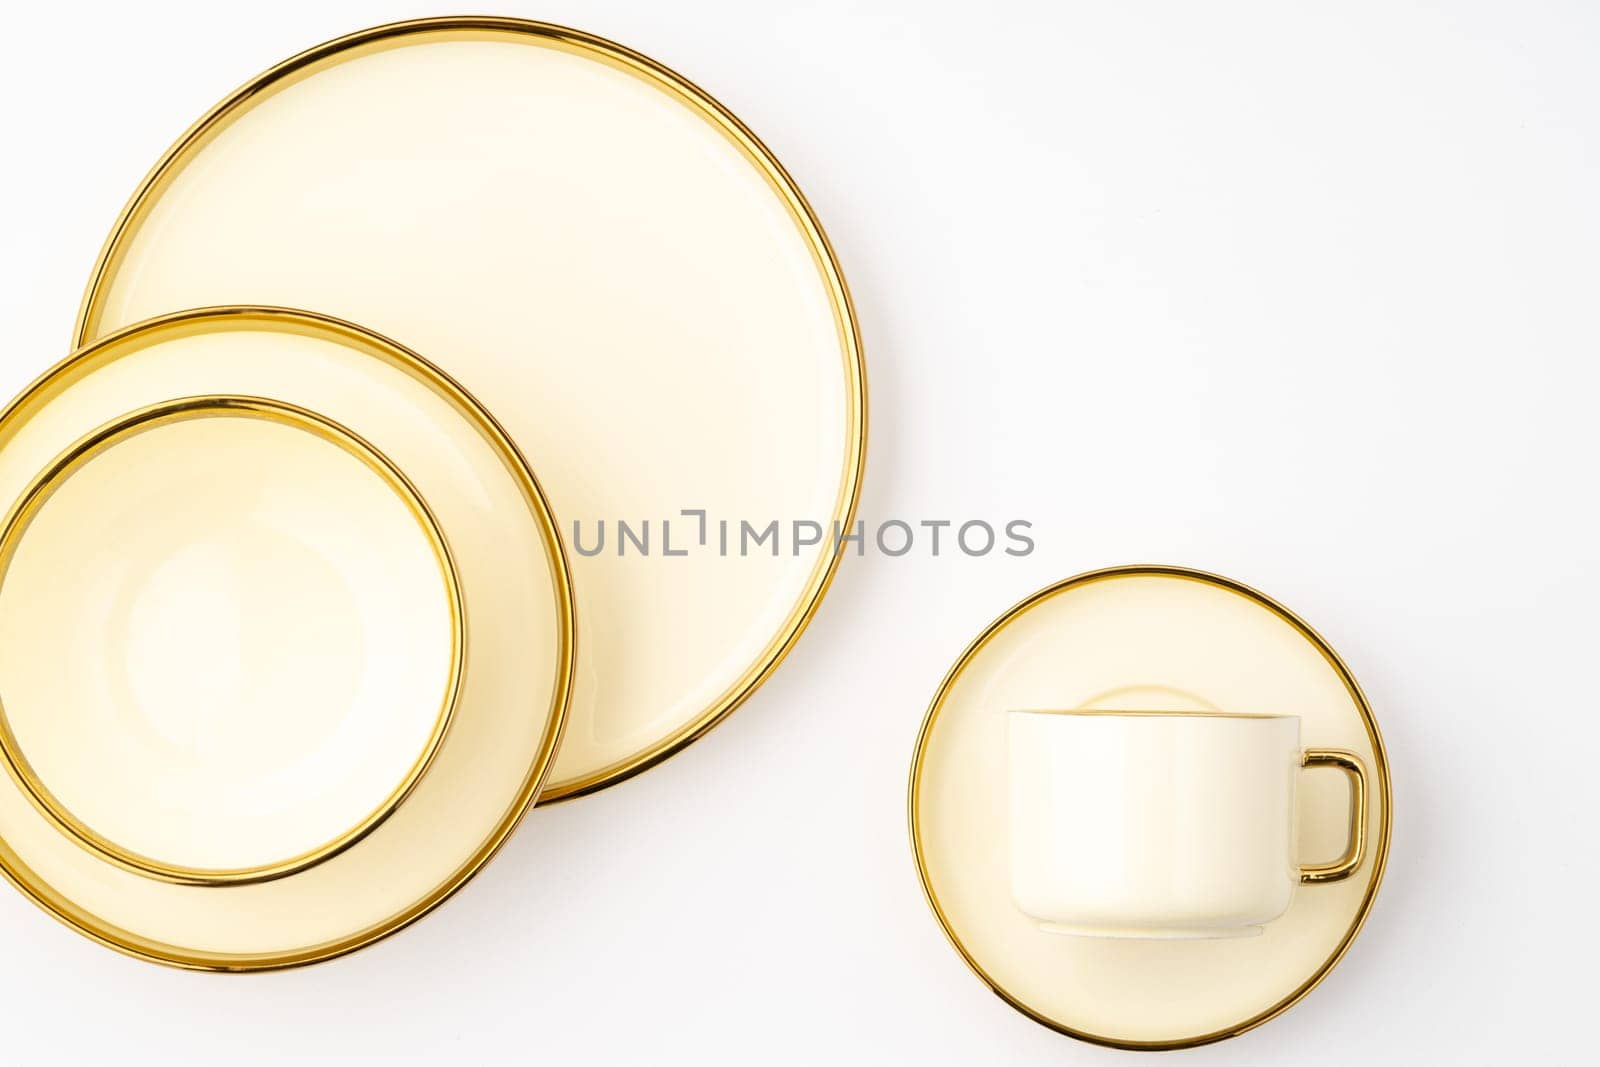 A top-view shot of golden luxury ceramic kitchen utensils on a white background